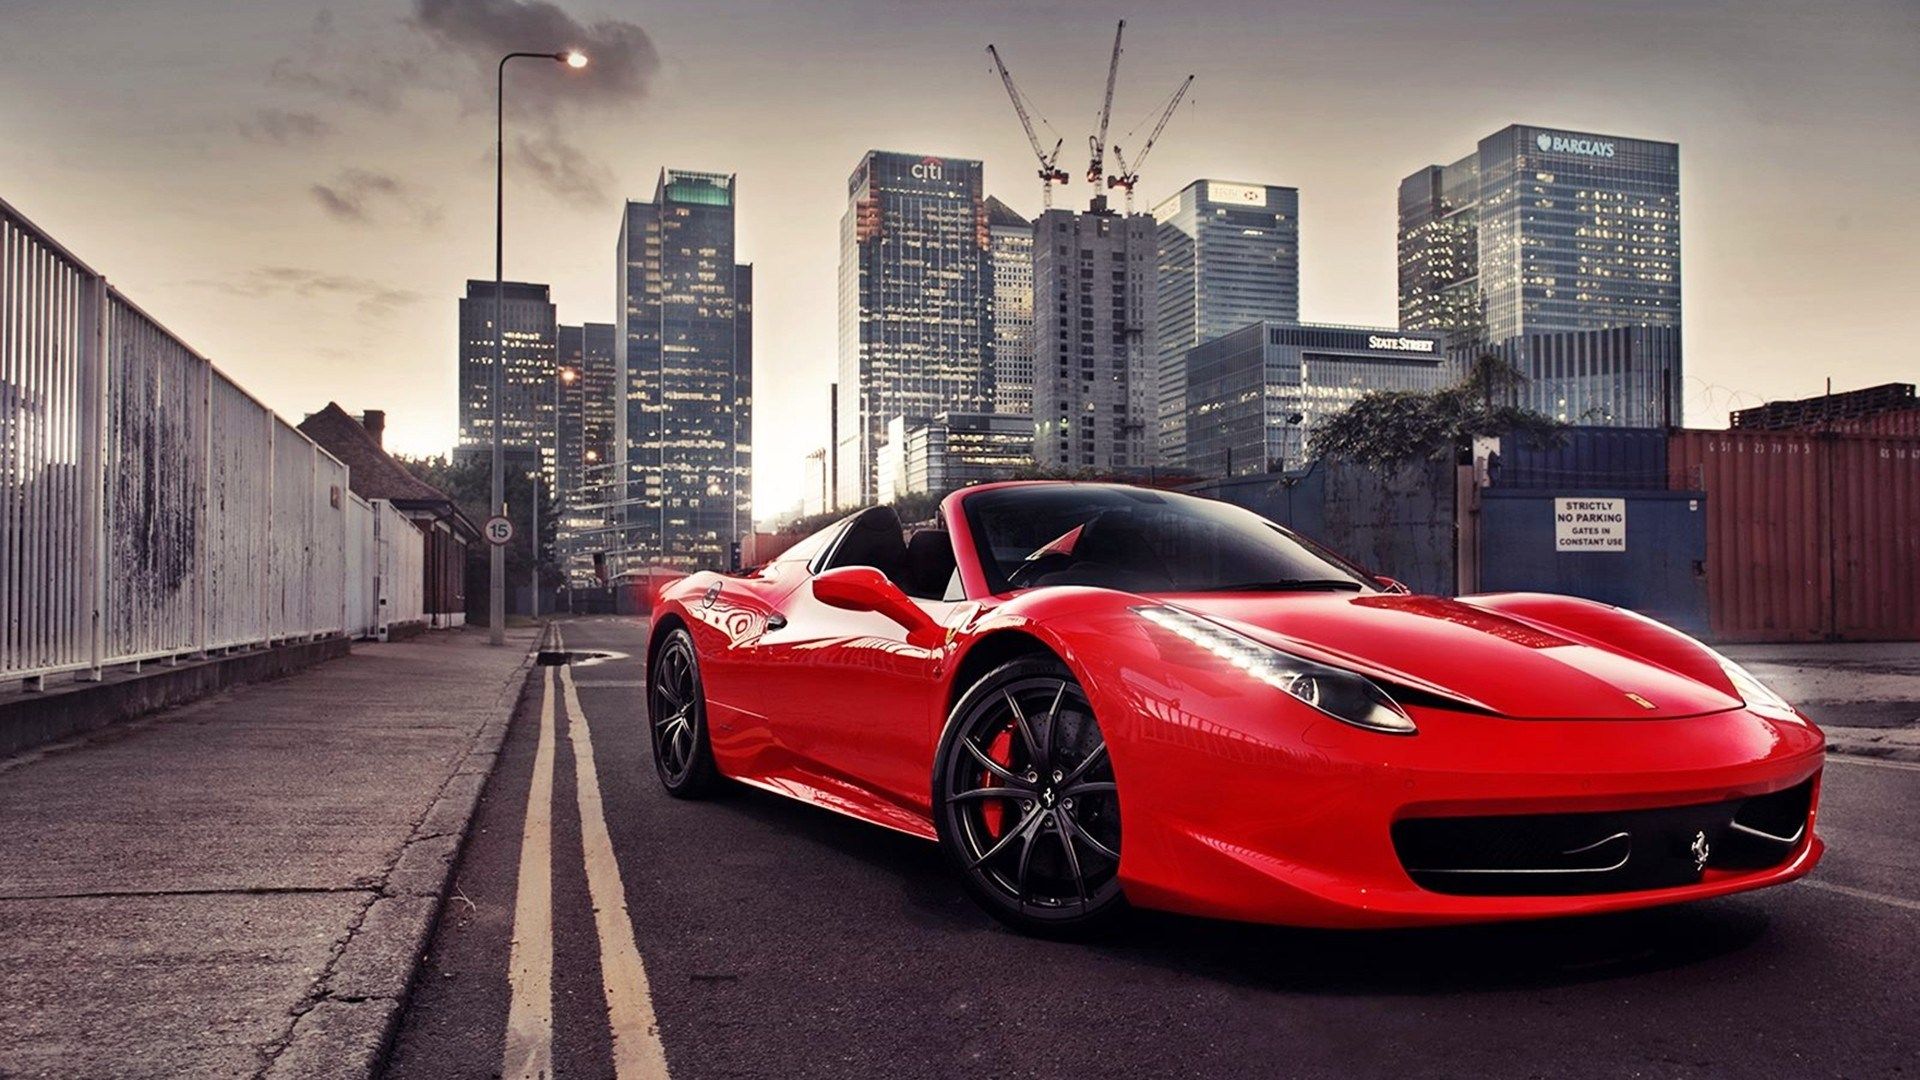 Hình nền xe Ferrari đẹp